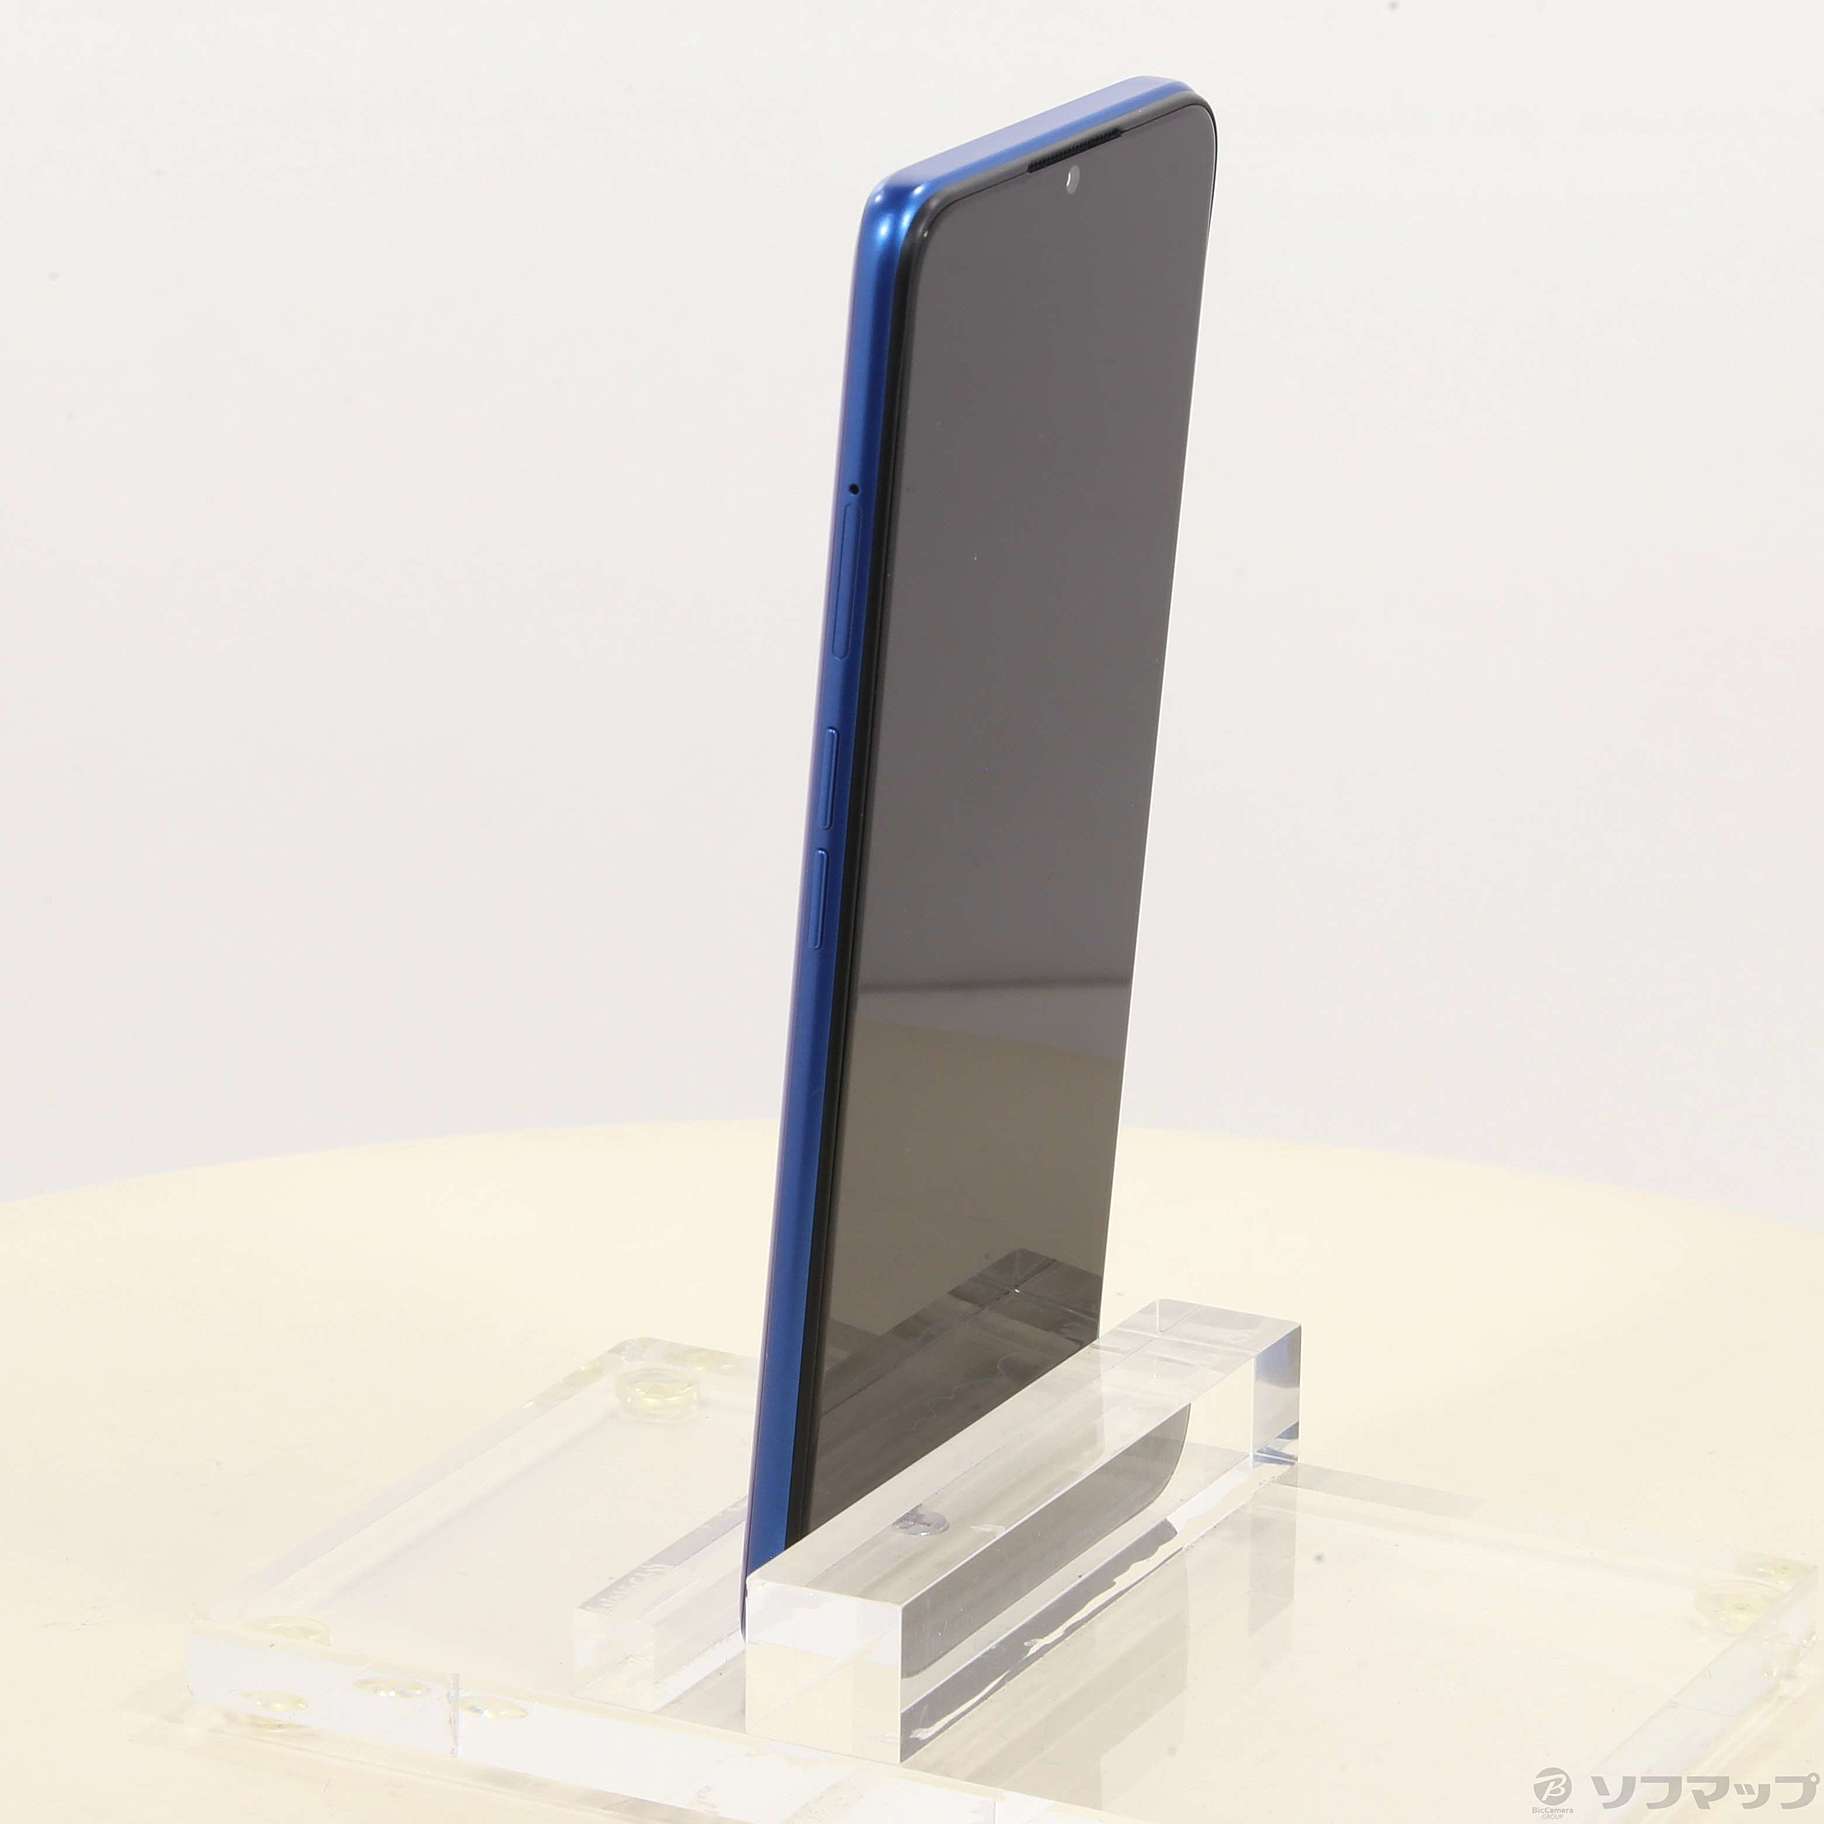 OPPO A5 2020 SIMフリー 64GB ブルー 版 - スマートフォン本体